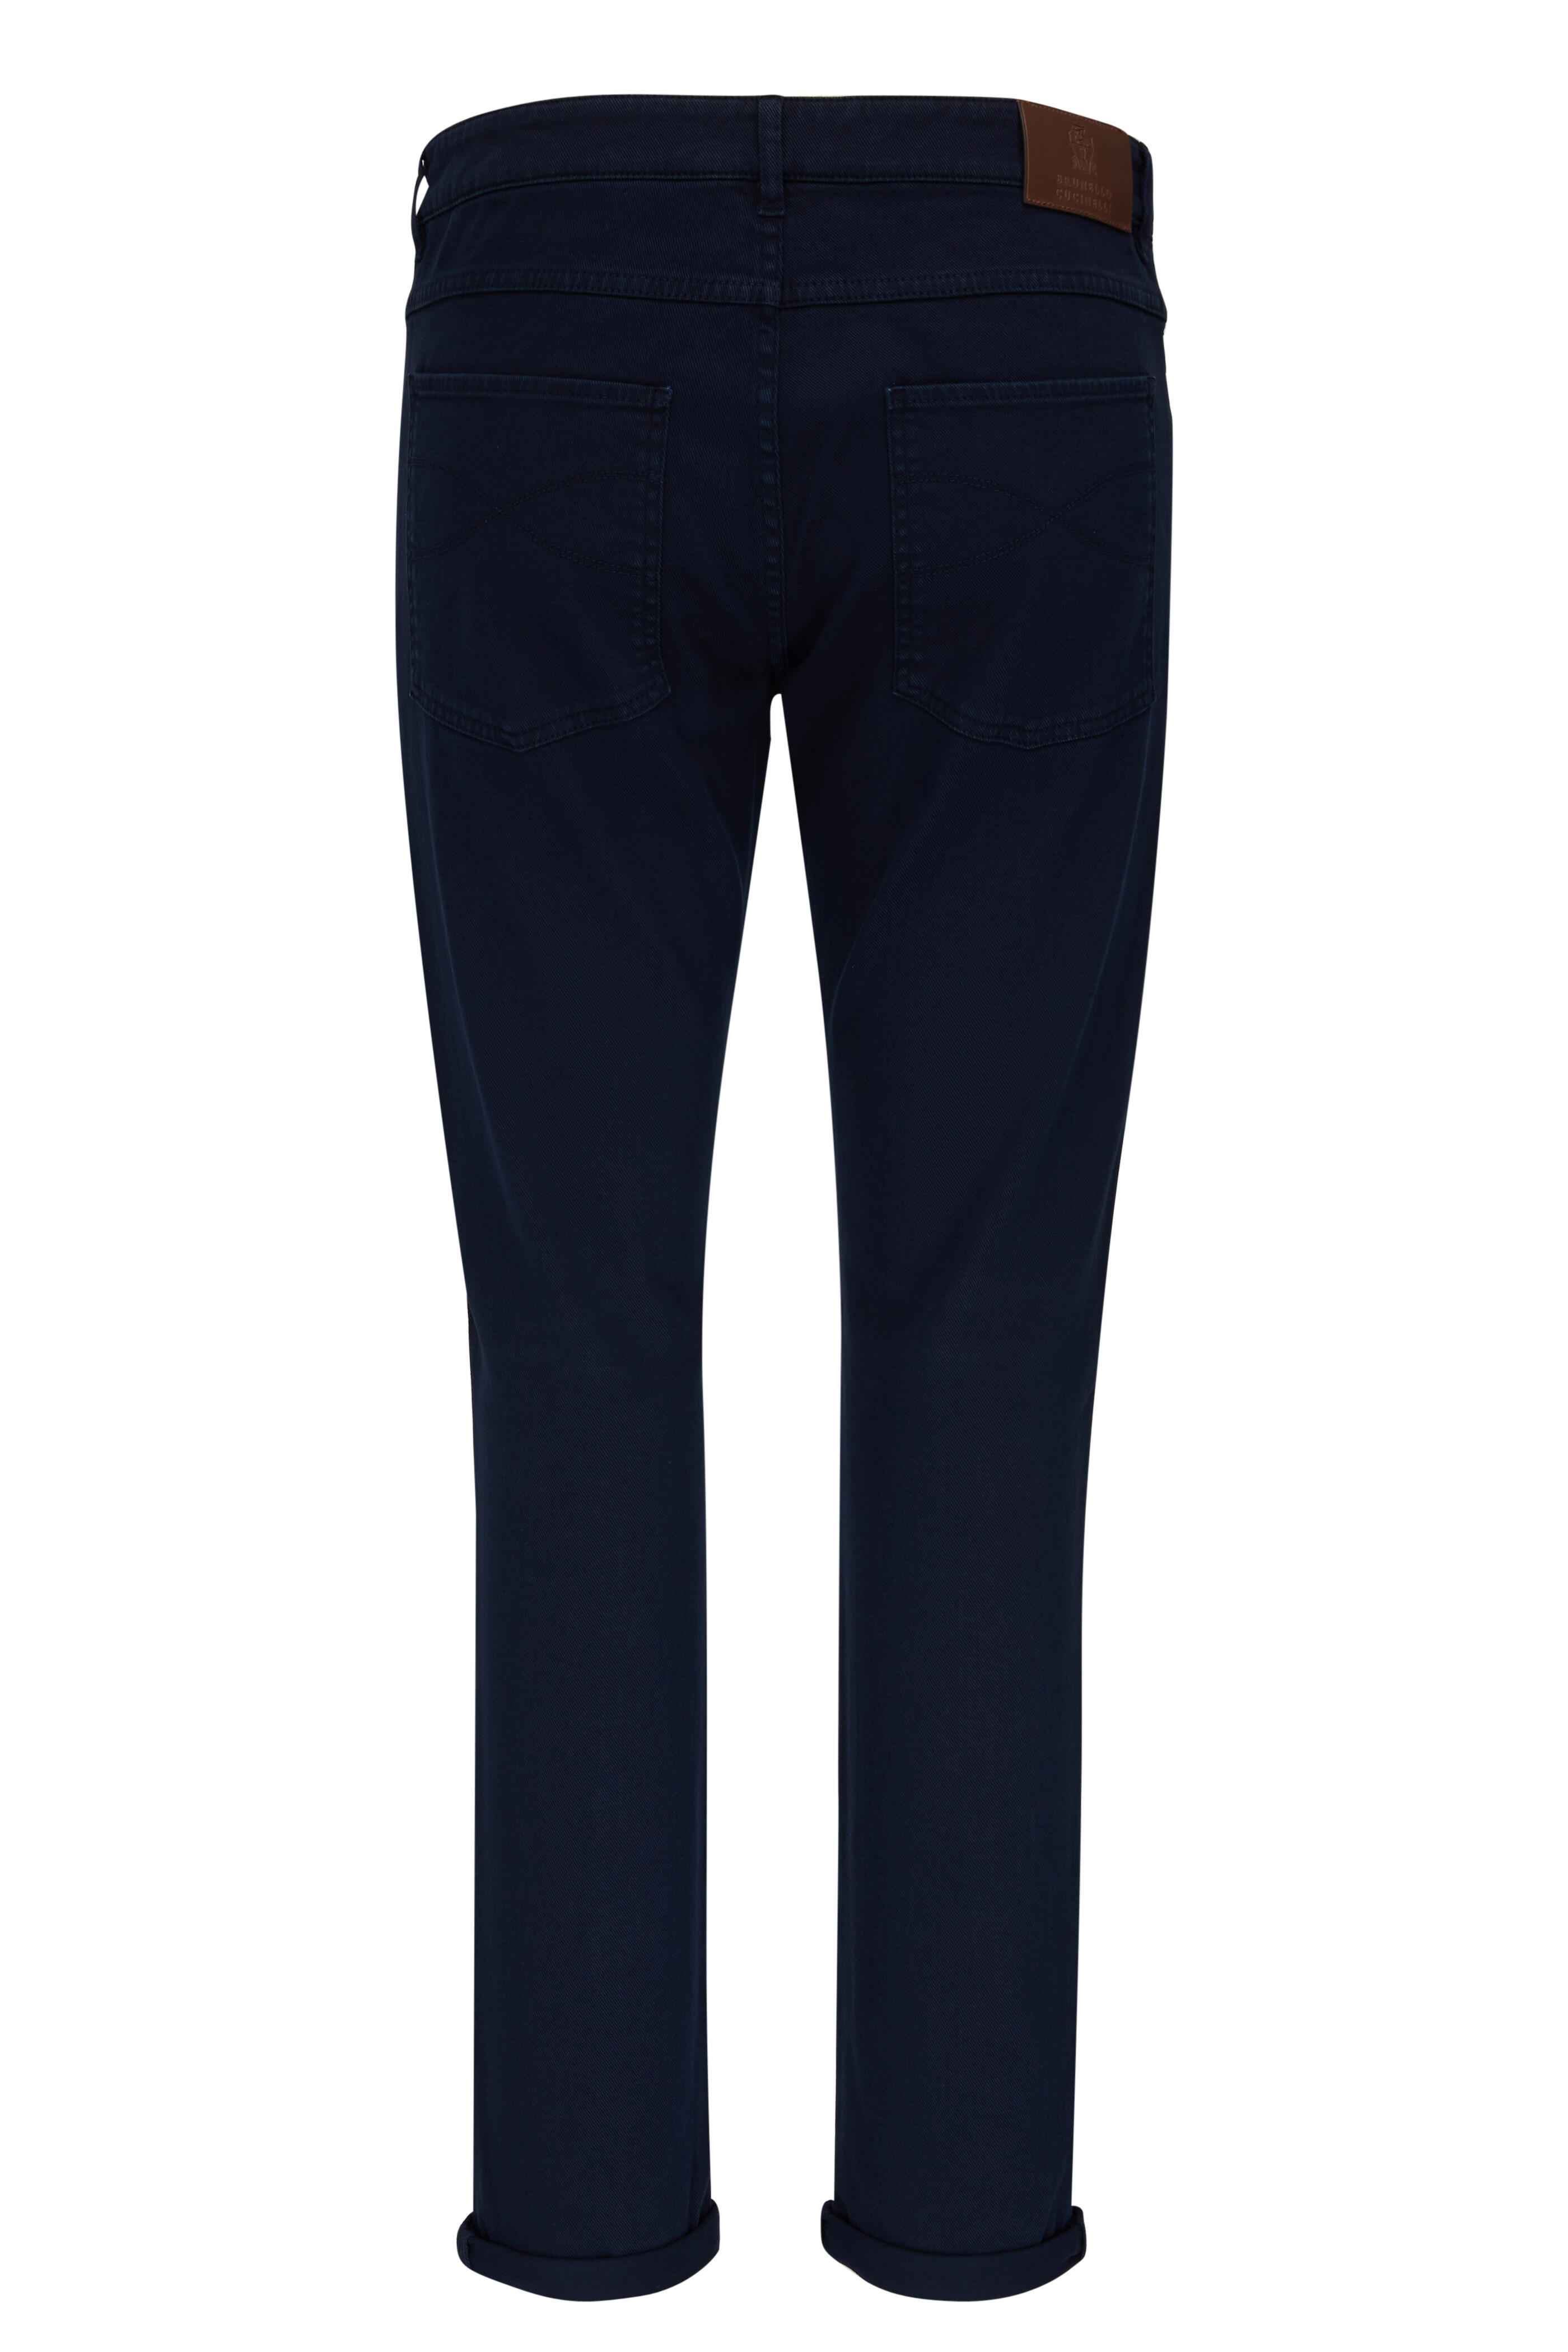 Brunello Cucinelli - Navy Five Pocket Skinny Fit Jean